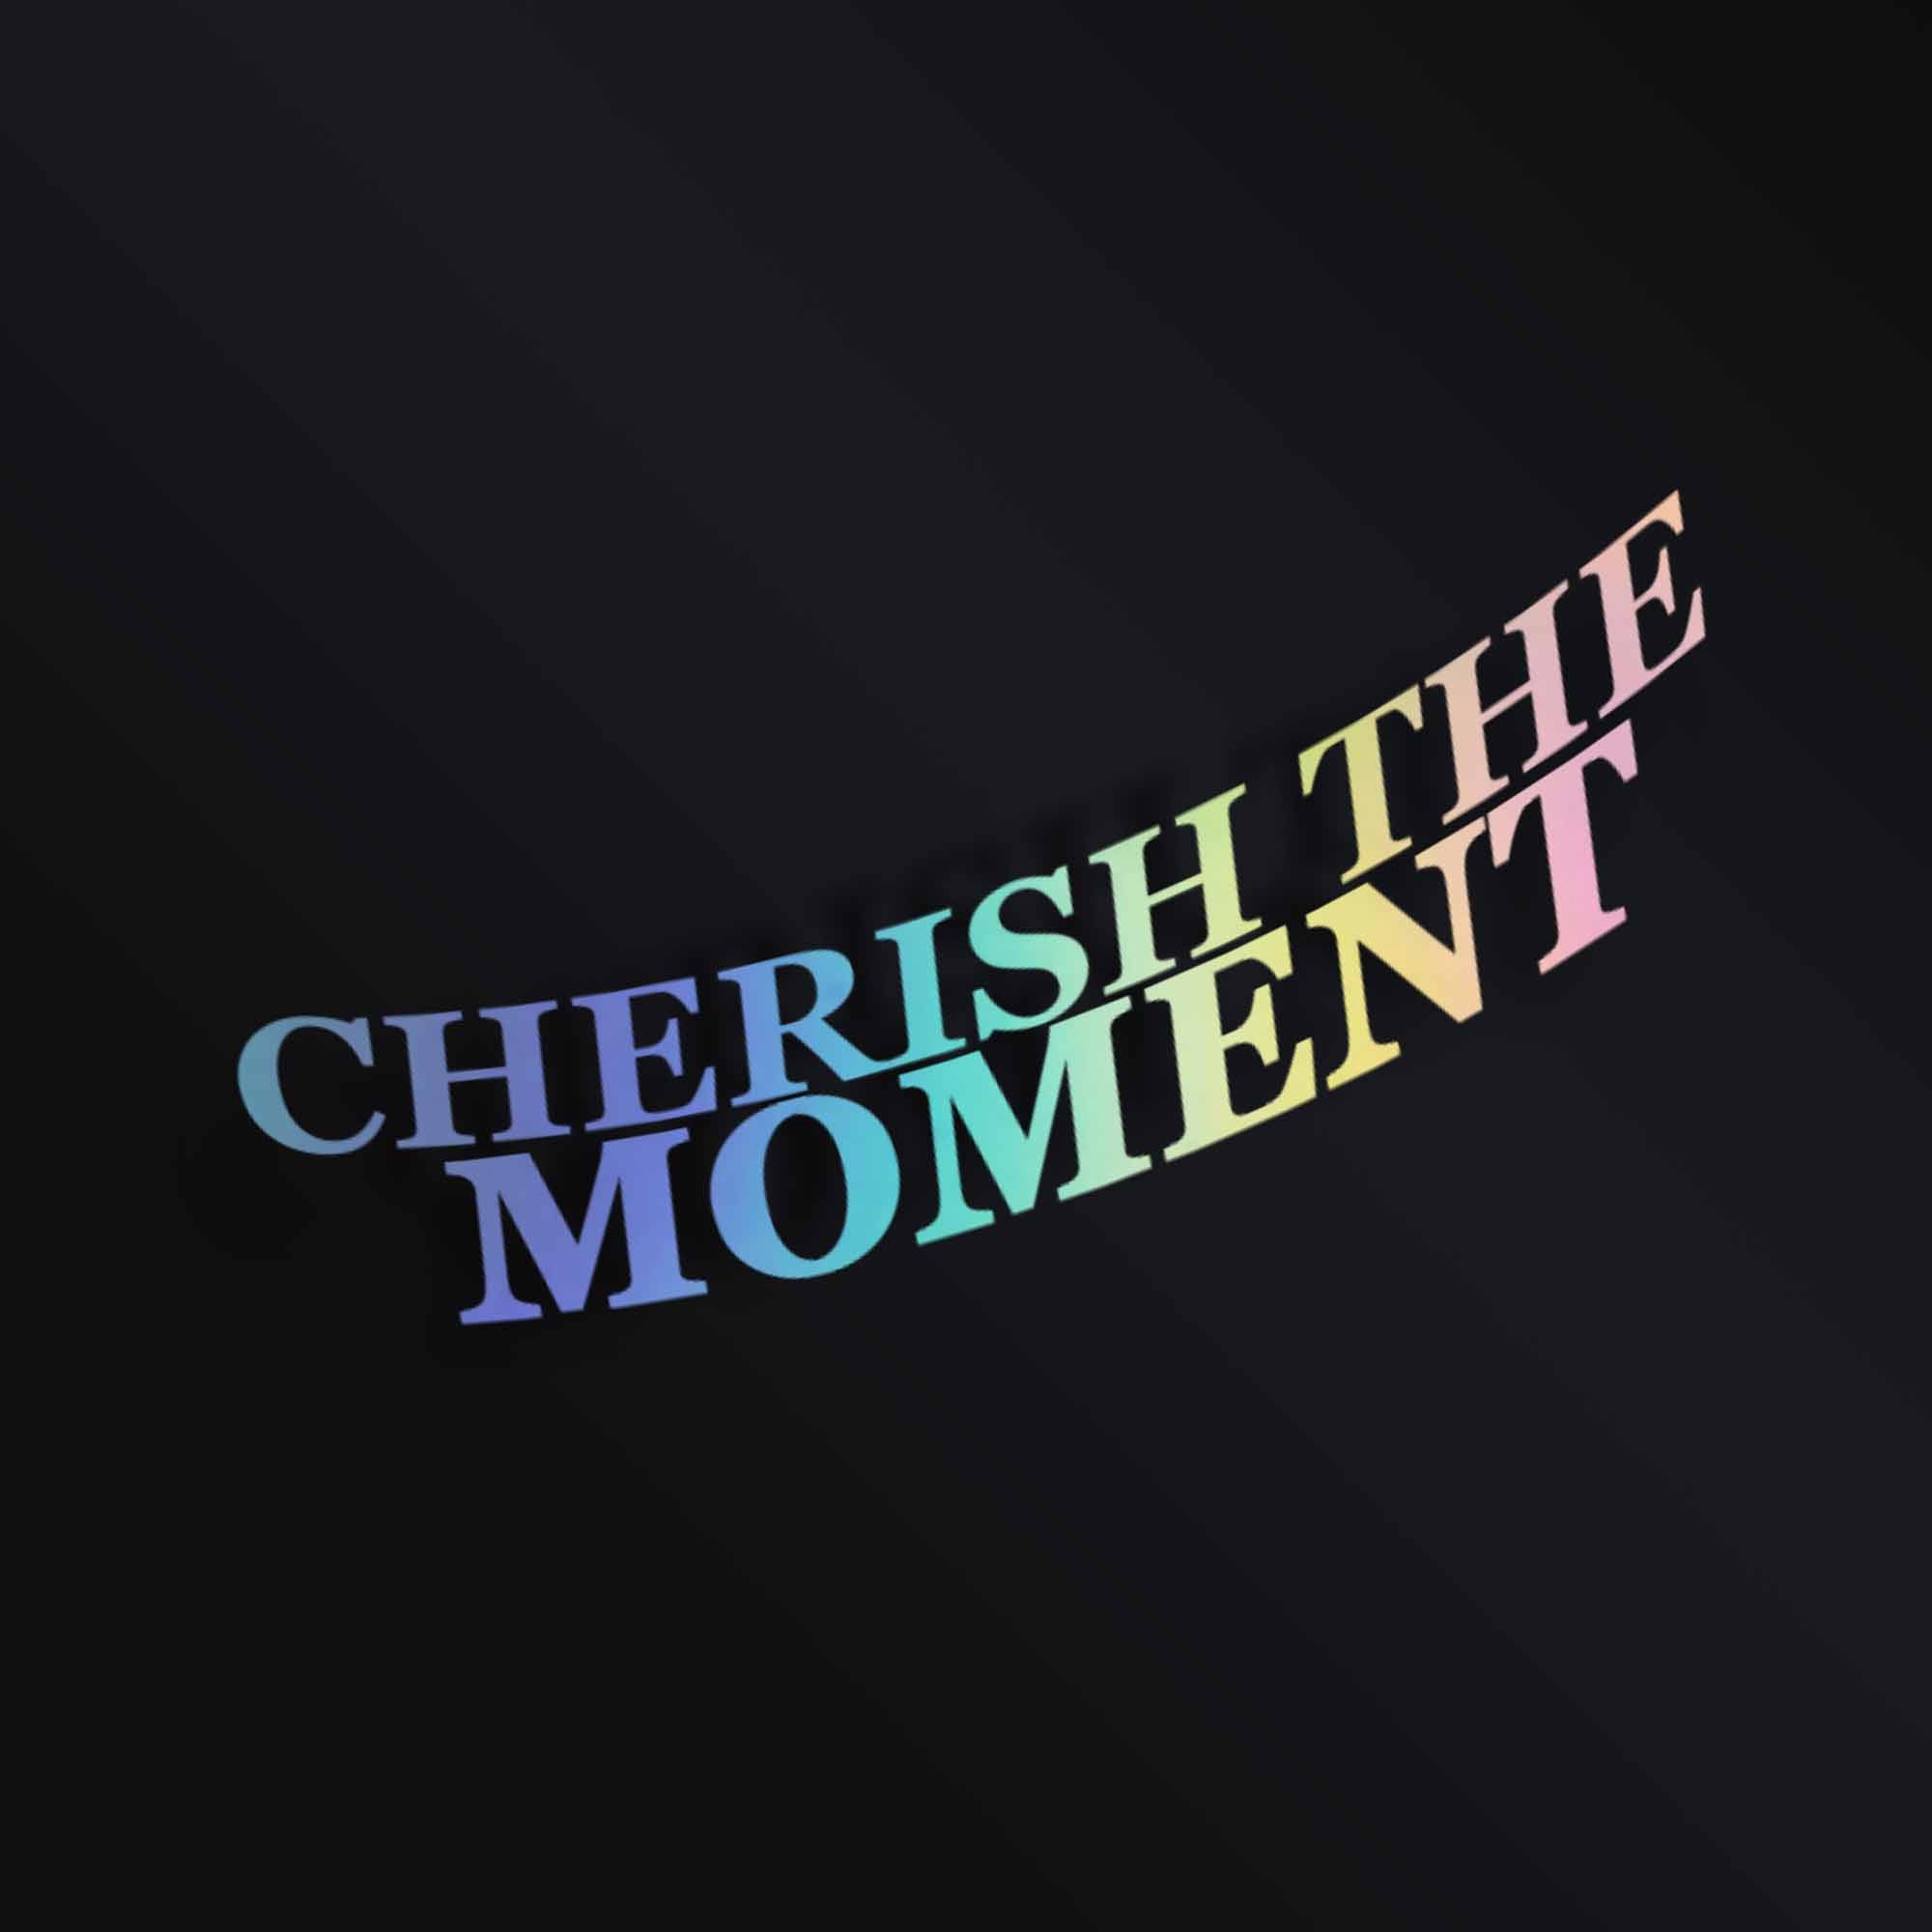 CHERISH THE MOMENT STICKER